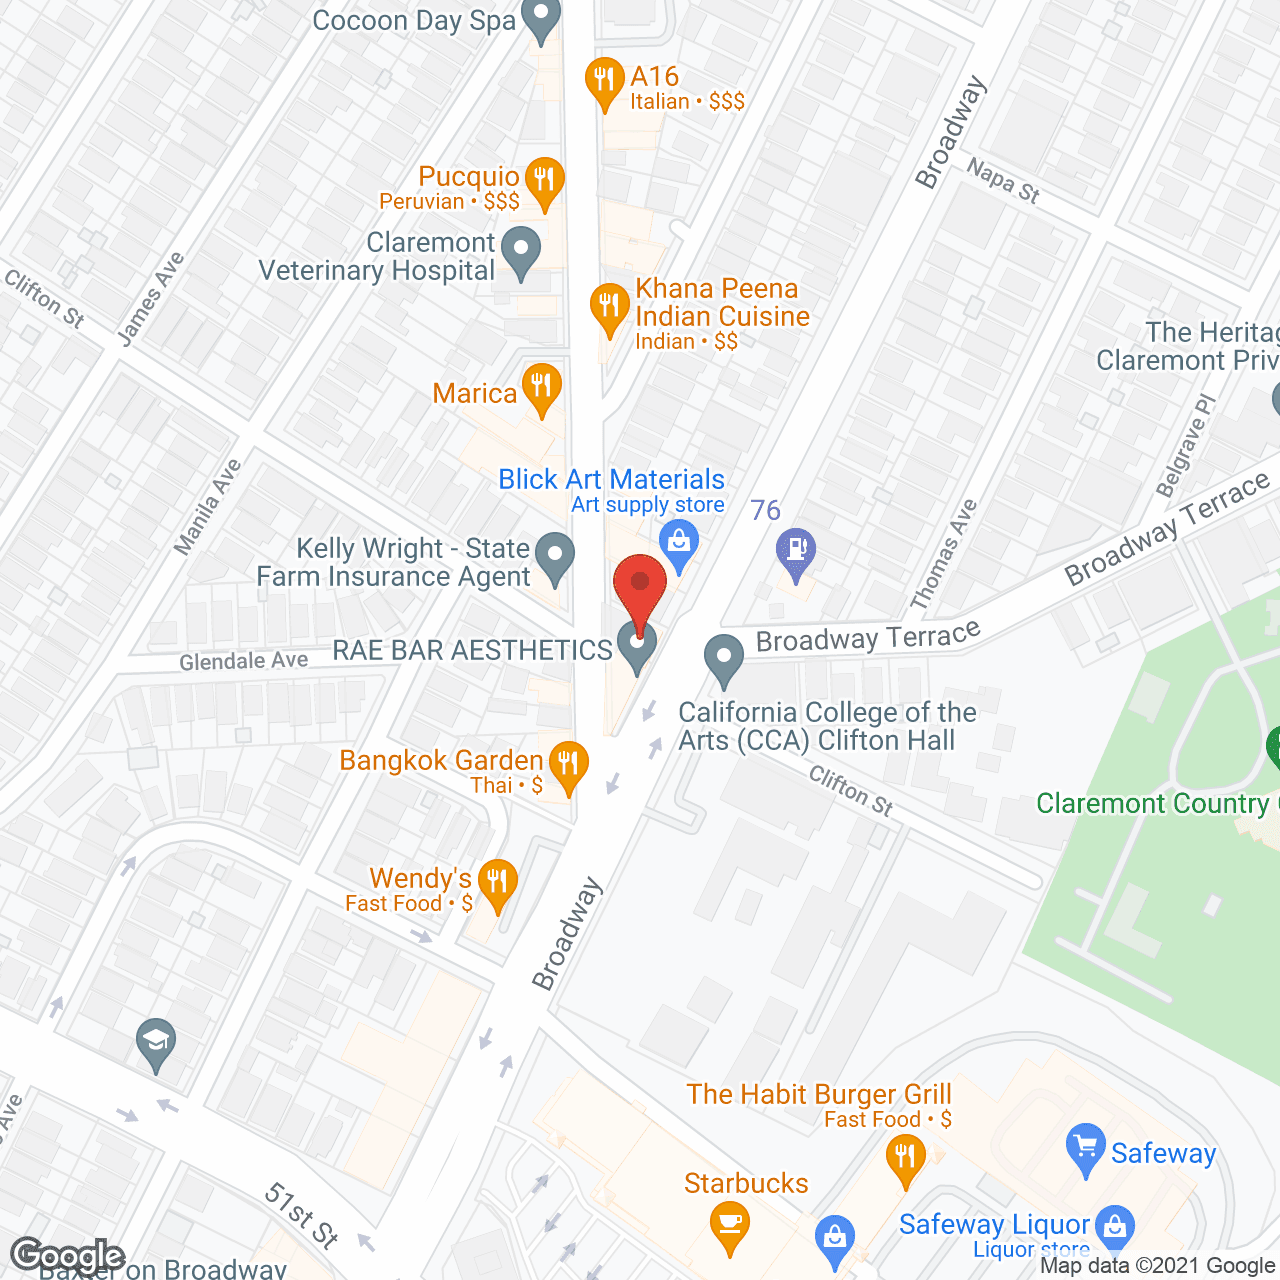 TheKey Oakland in google map